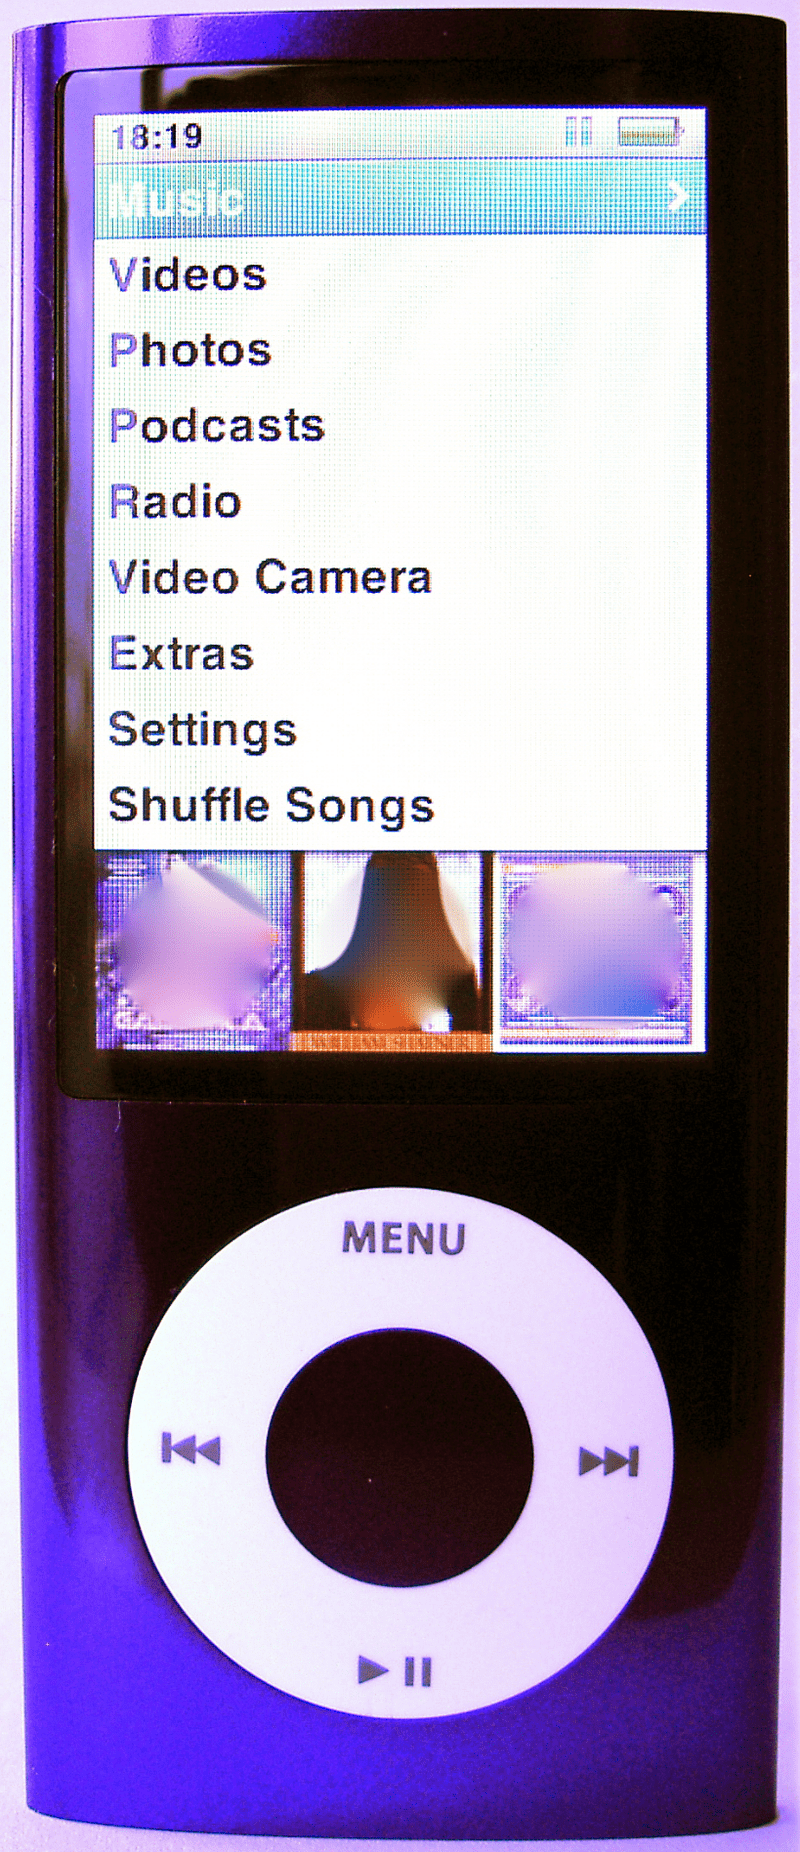 5th generation iPod Nano with camera.